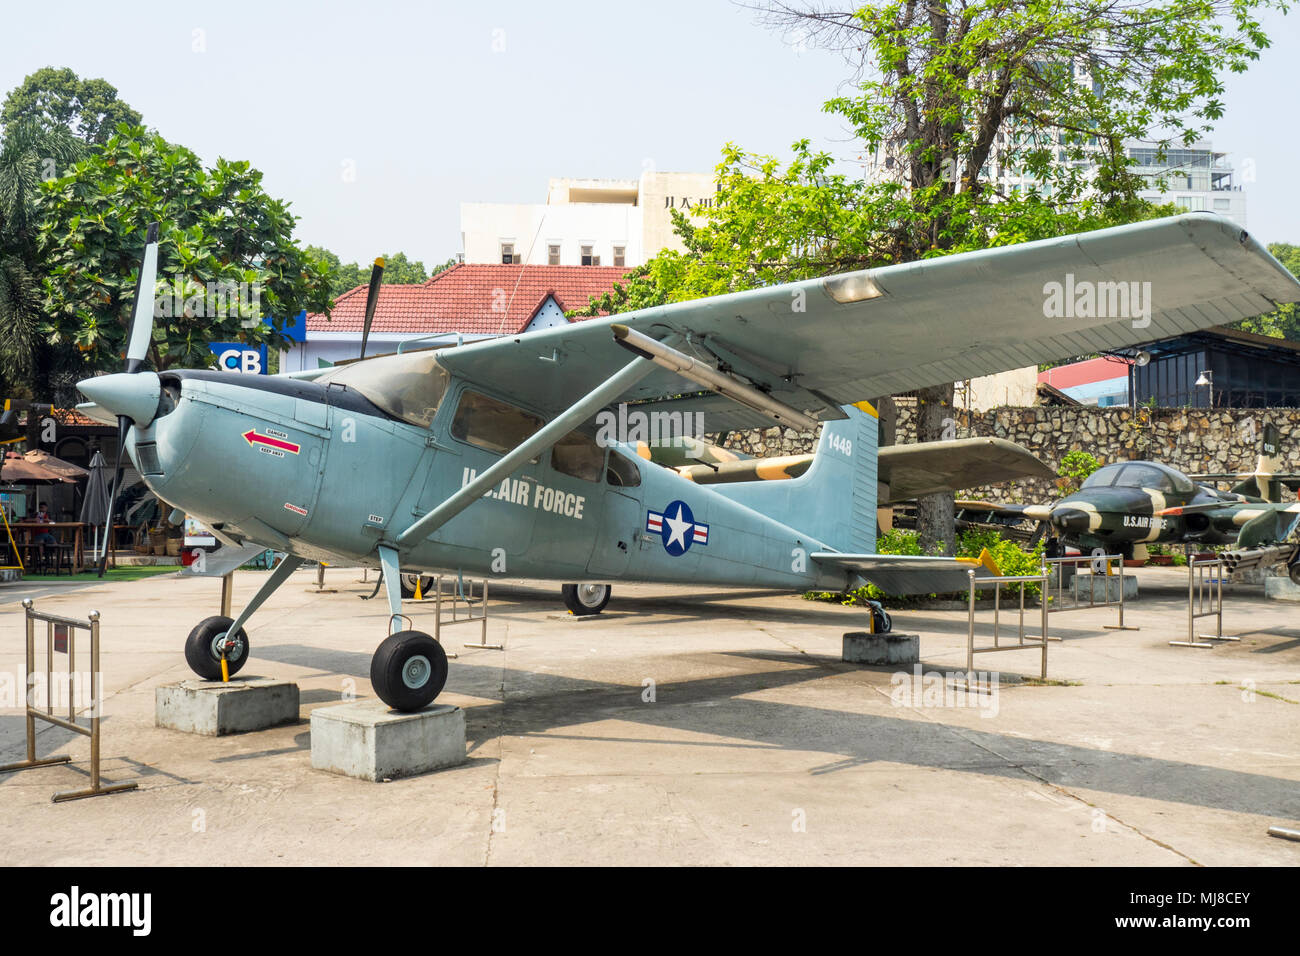 US Air Force cessna U 17 Aufklärer aus dem Vietnamkrieg auf Anzeige an das War Remnants Museum, Ho Chi Minh City, Vietnam. Stockfoto